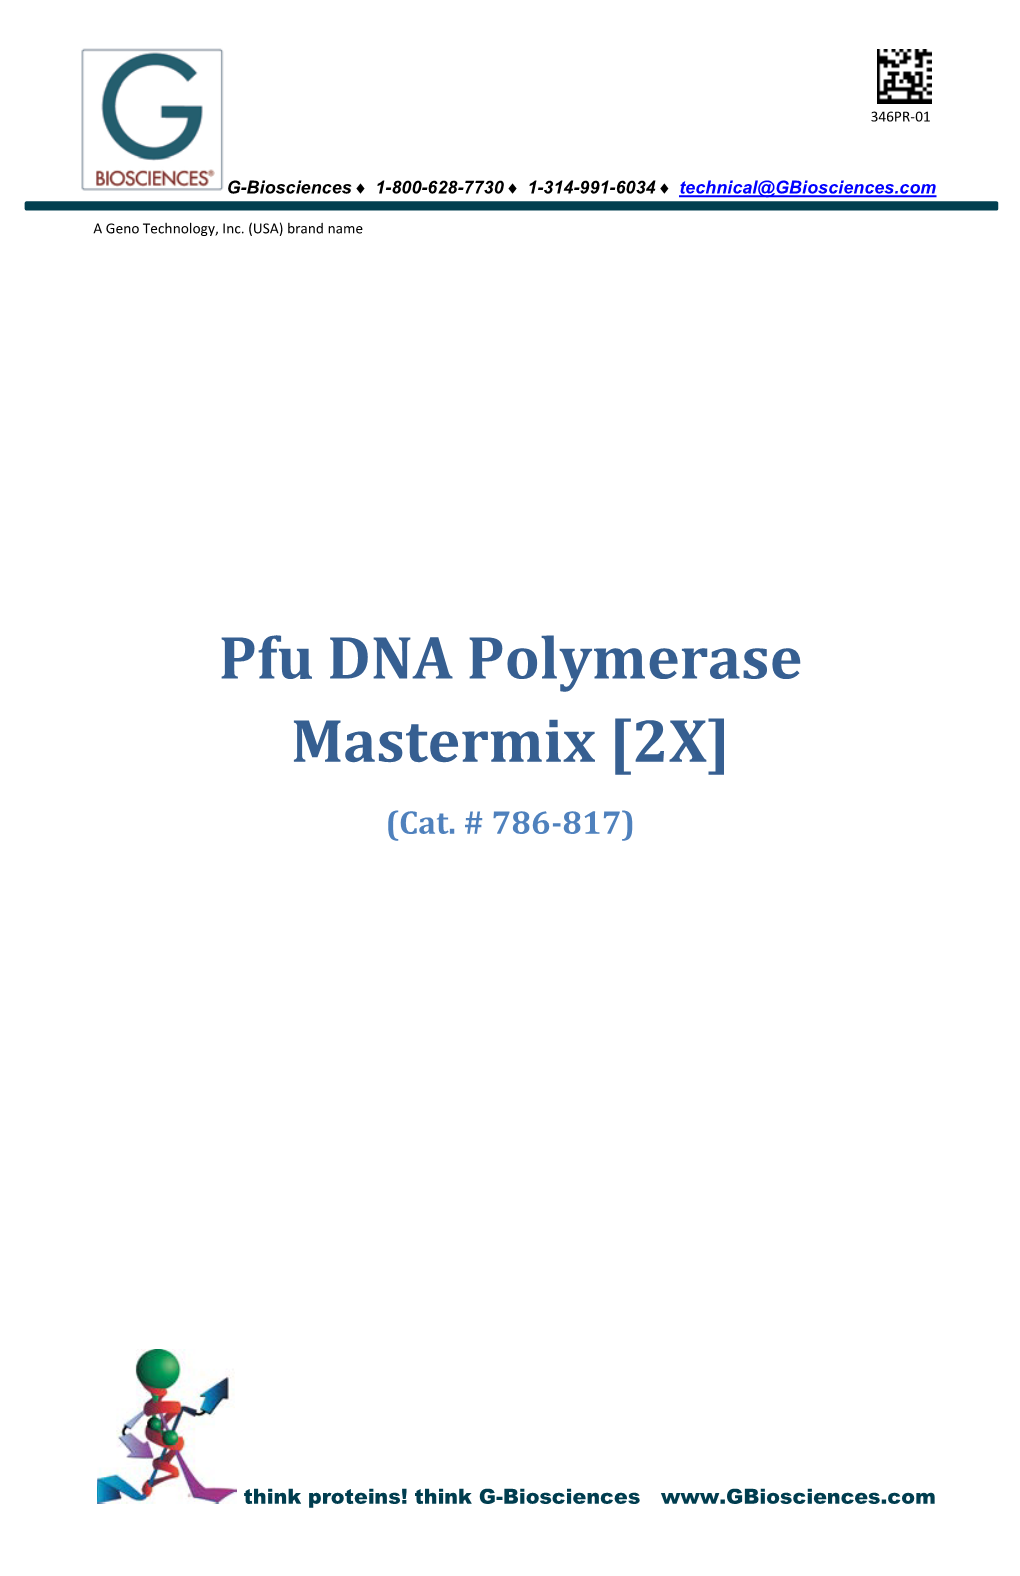 Pfu DNA Polymerase Mastermix [2X] (Cat